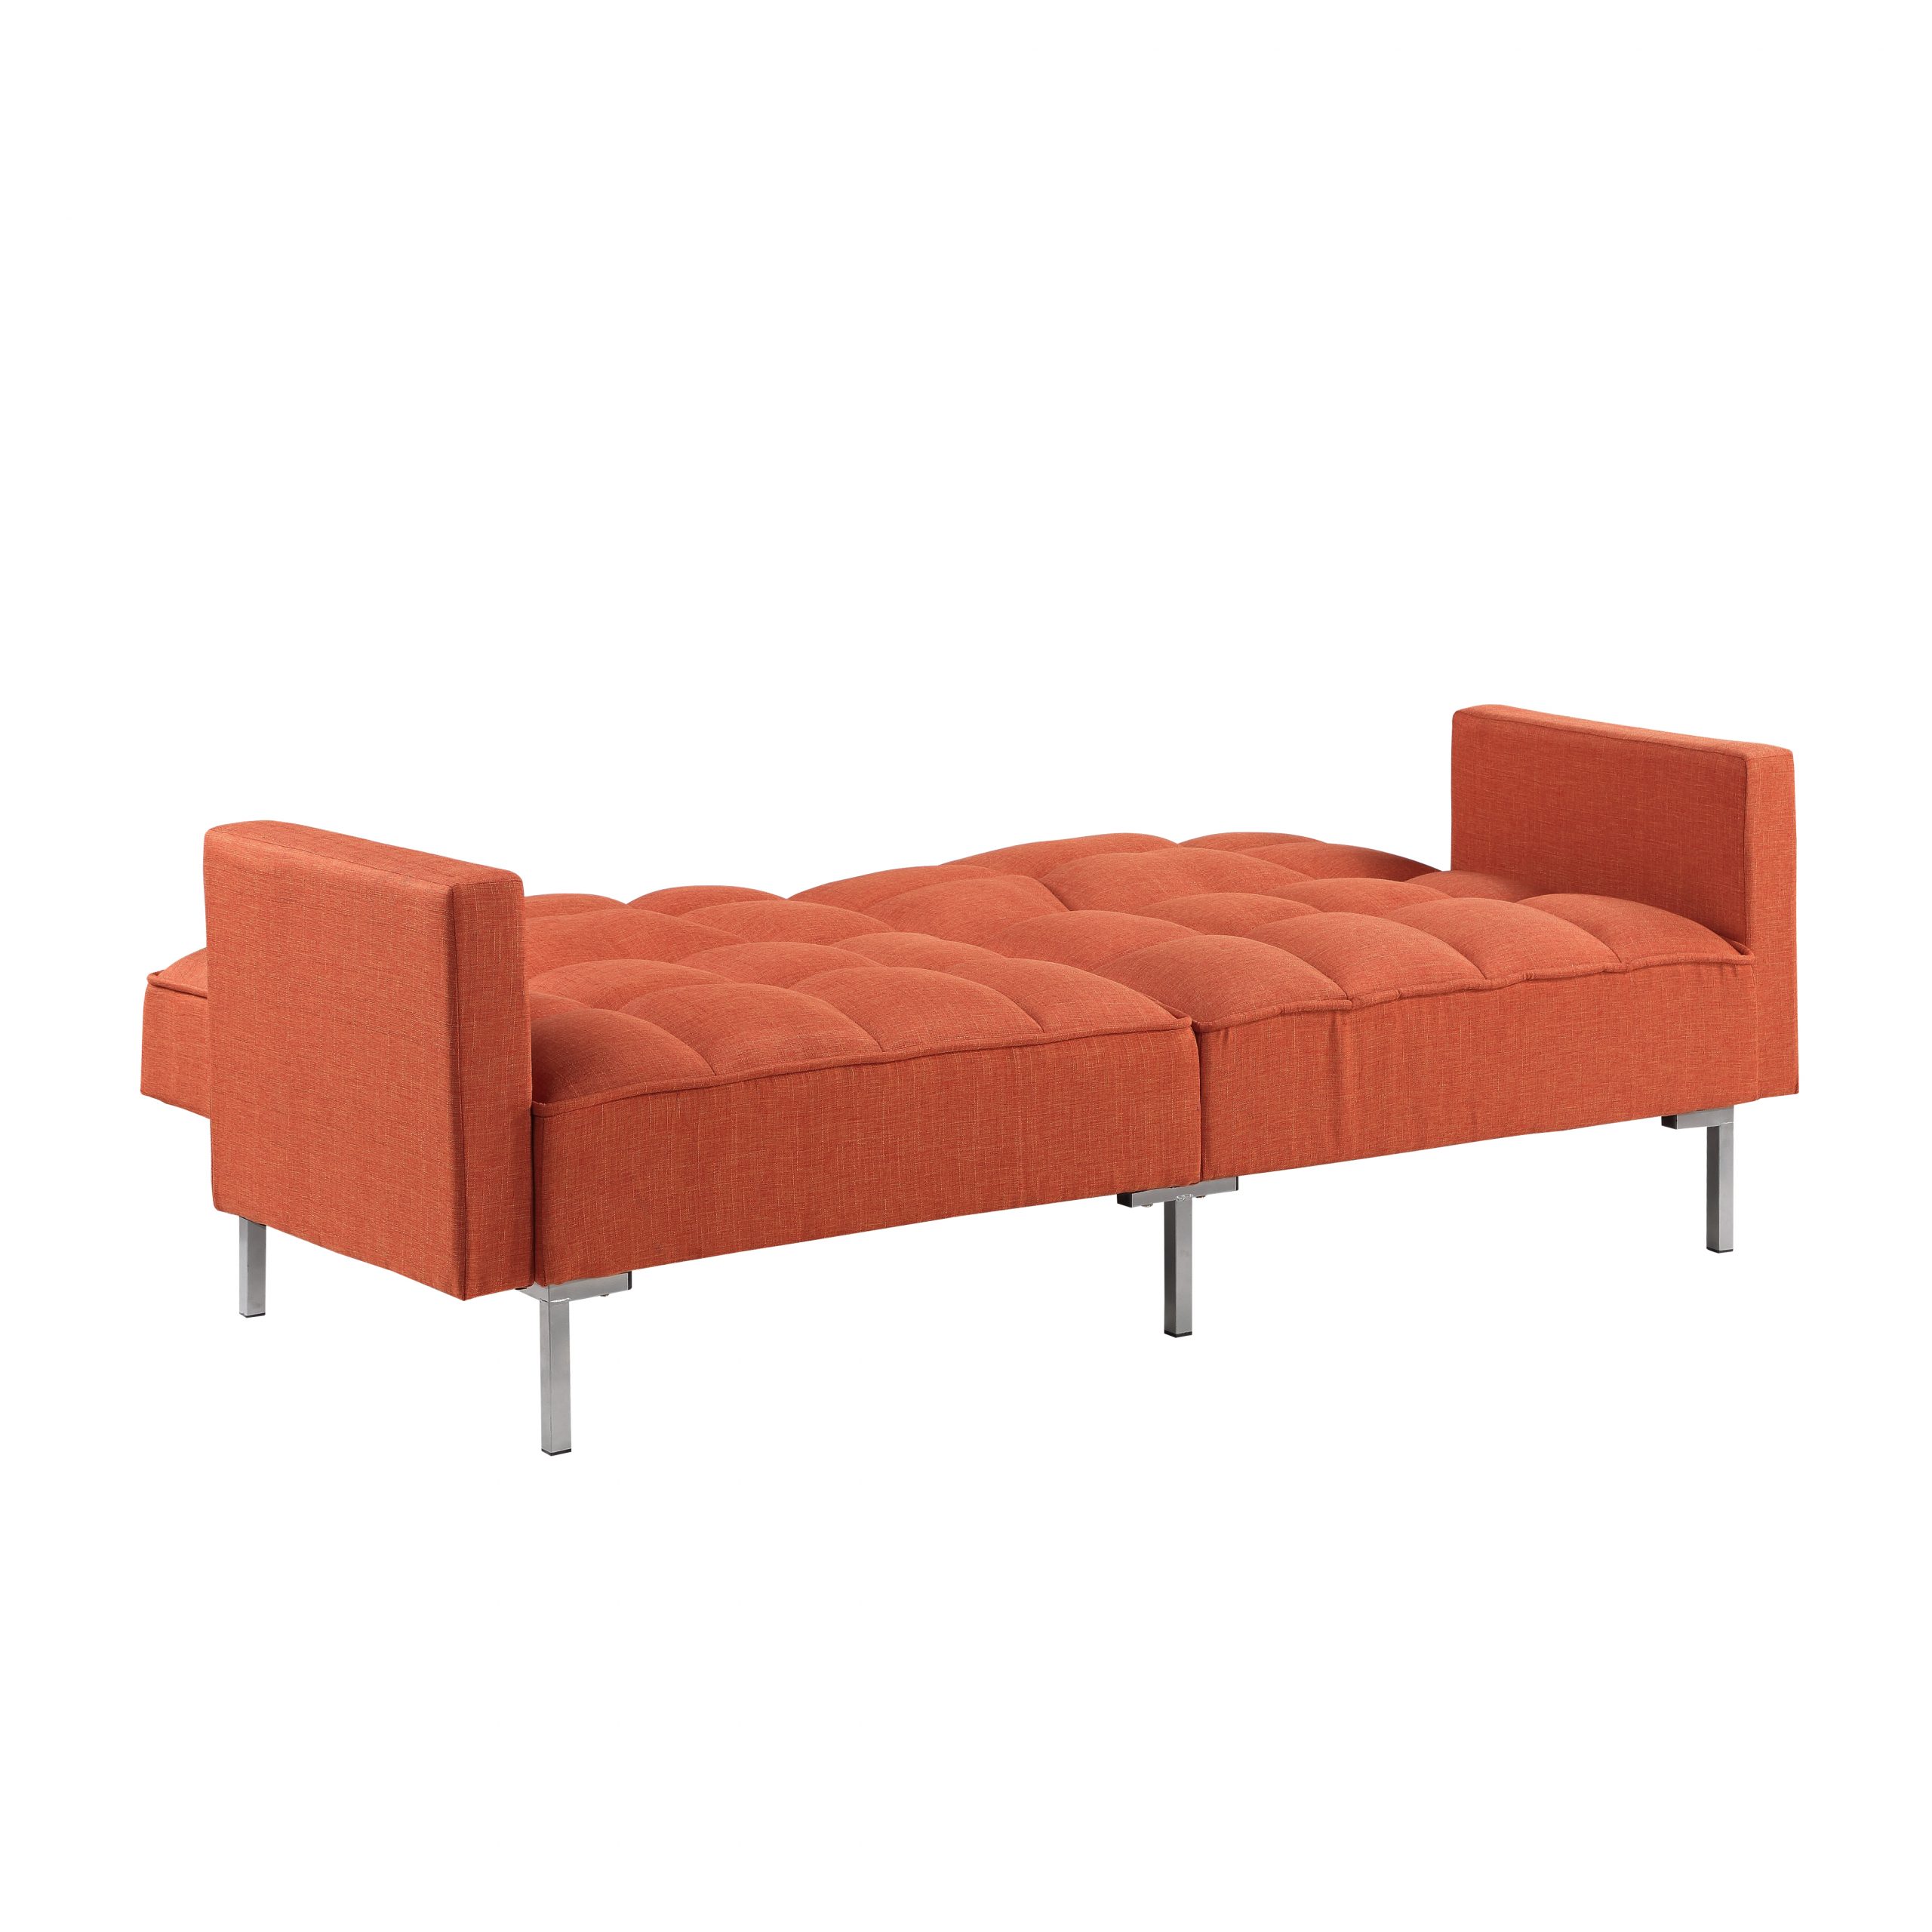 Modern Convertible Folding Sofa Bed - SG000375AAA